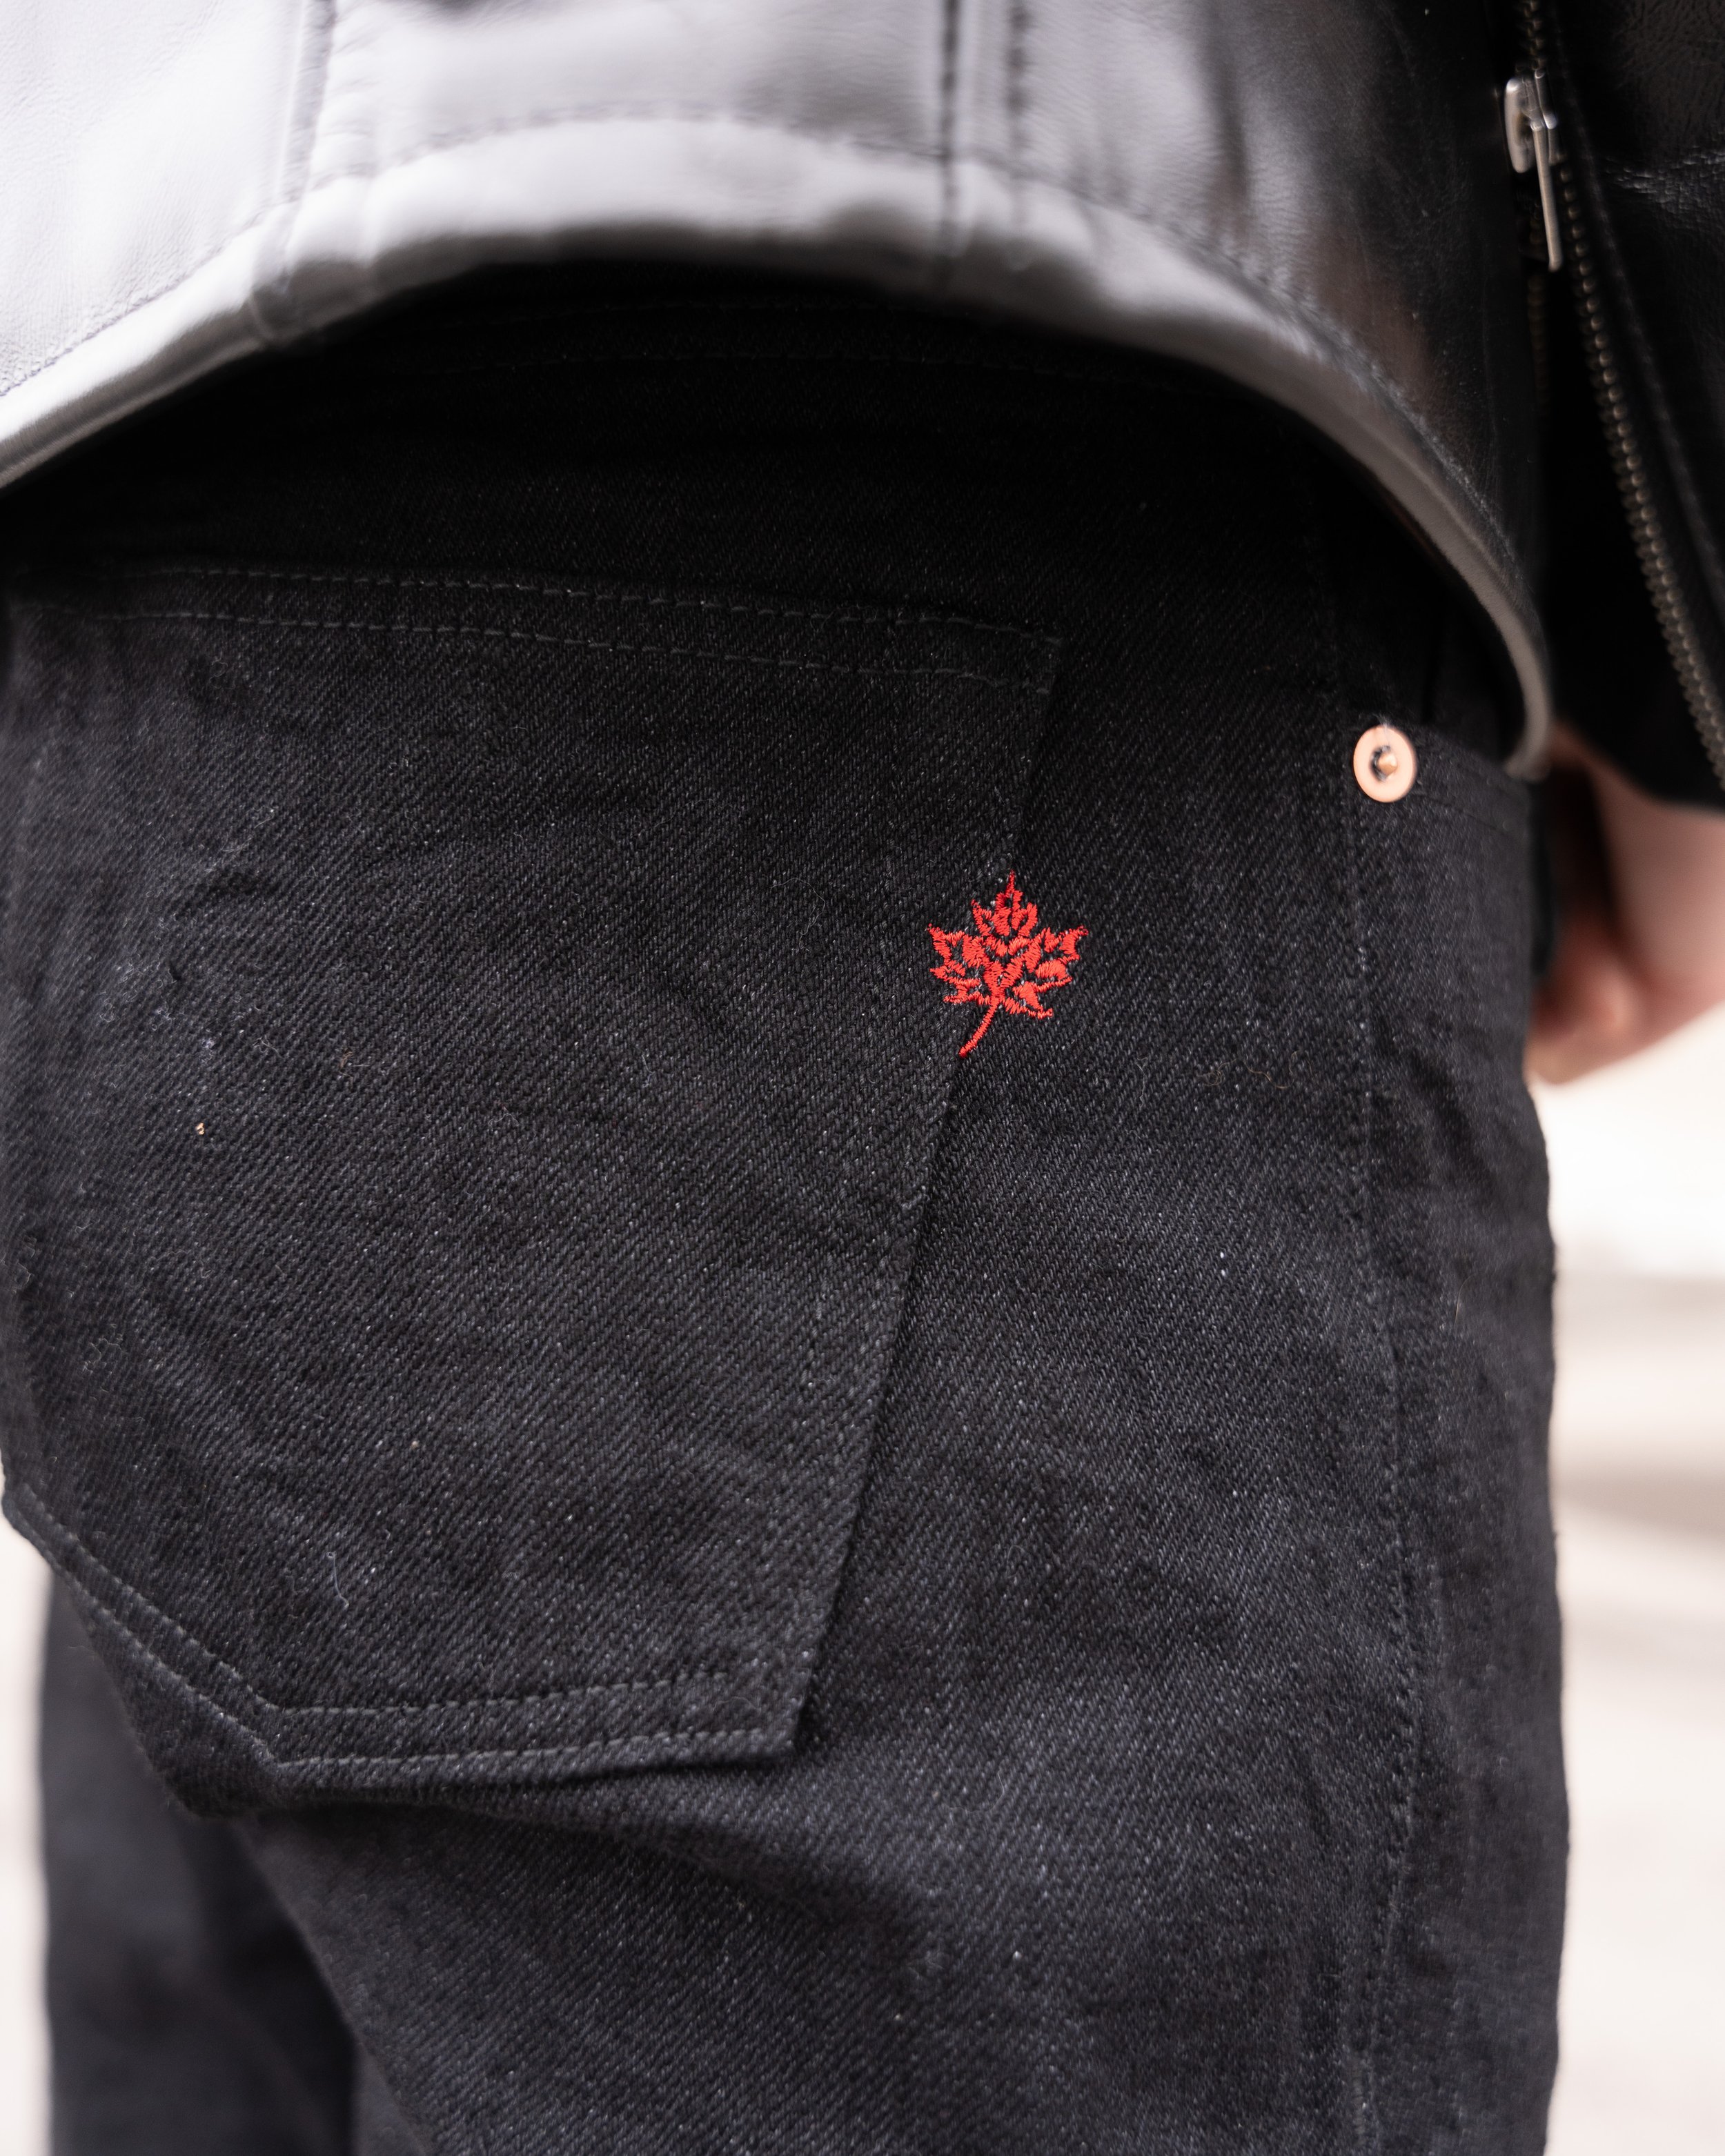 MIJ13 - Okayama Spirit Kuro - Lifestyle - Jeans Embroidery